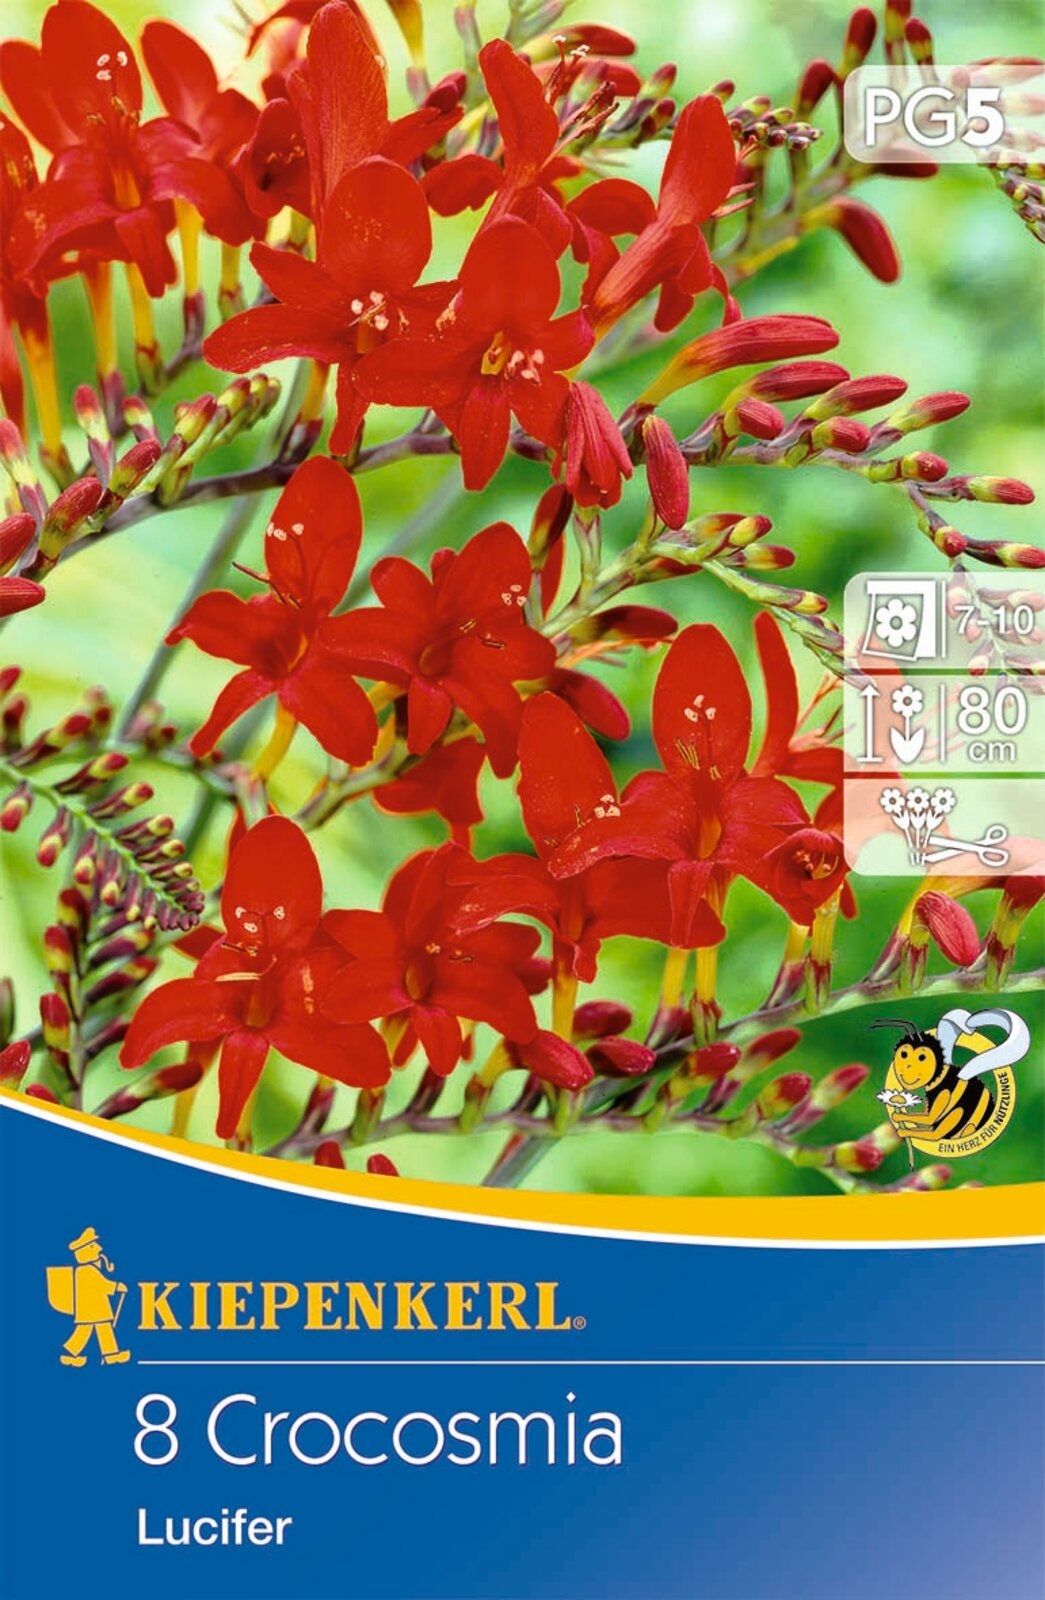 Virághagyma Füzéres sáfrányfű (Crocosmia) Lucifer (piros) Kiepenkerl 8 db